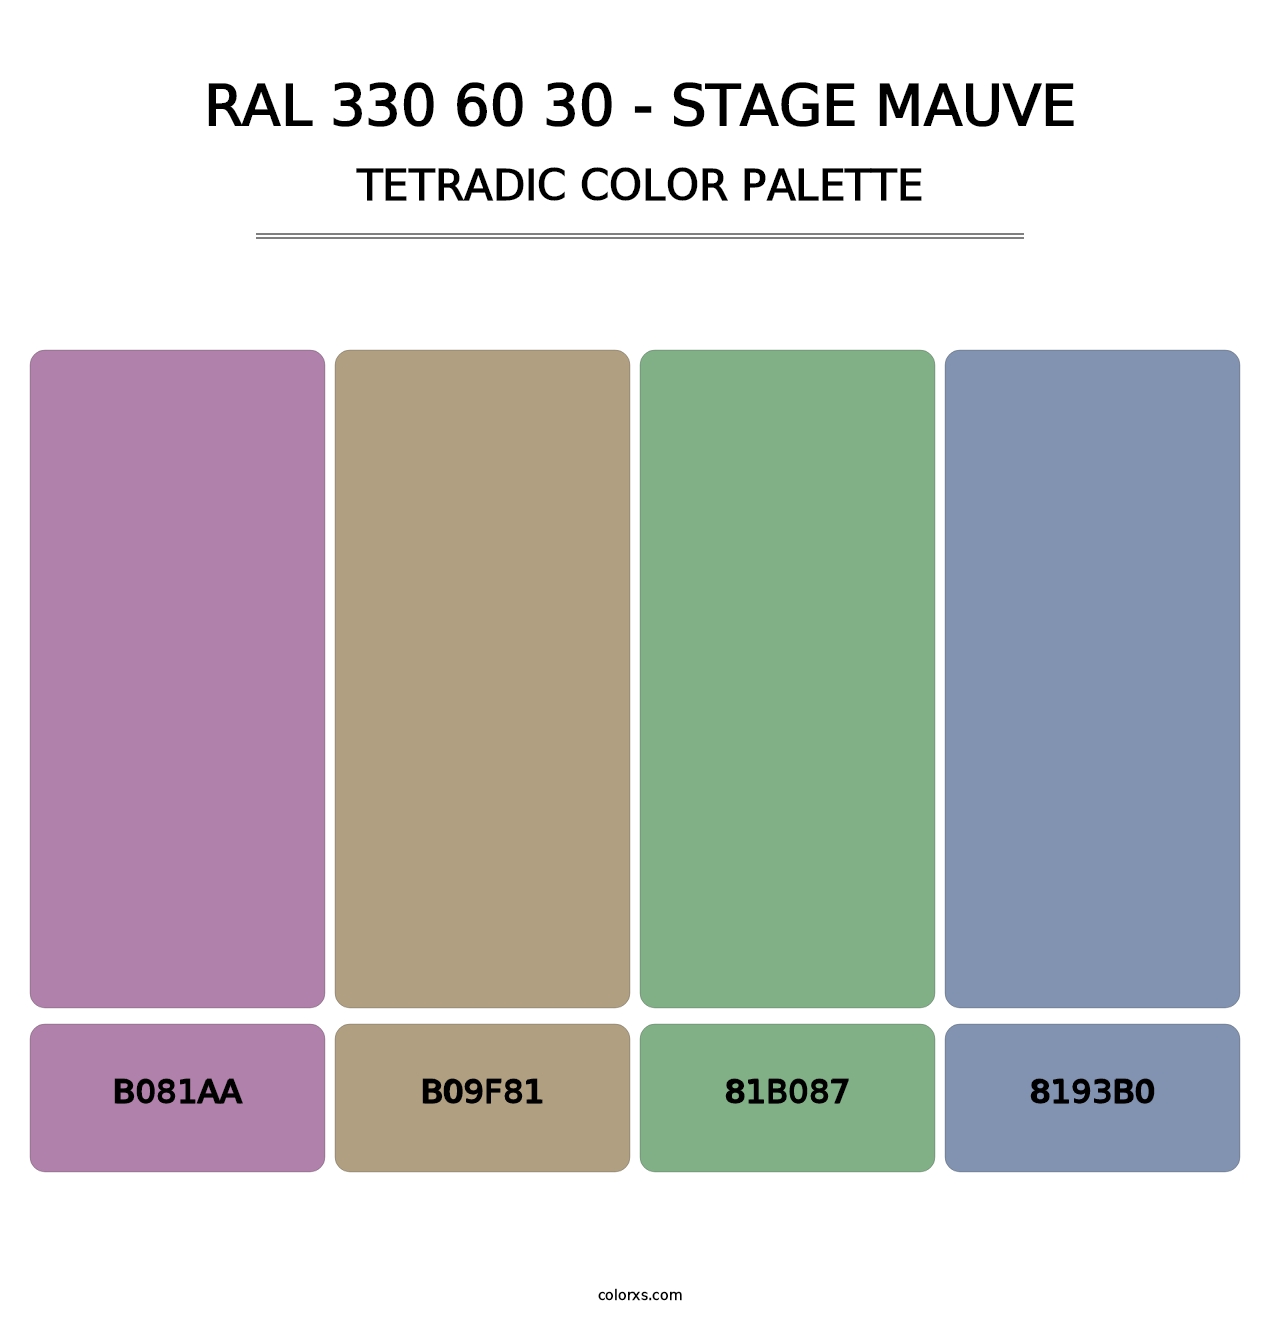 RAL 330 60 30 - Stage Mauve - Tetradic Color Palette